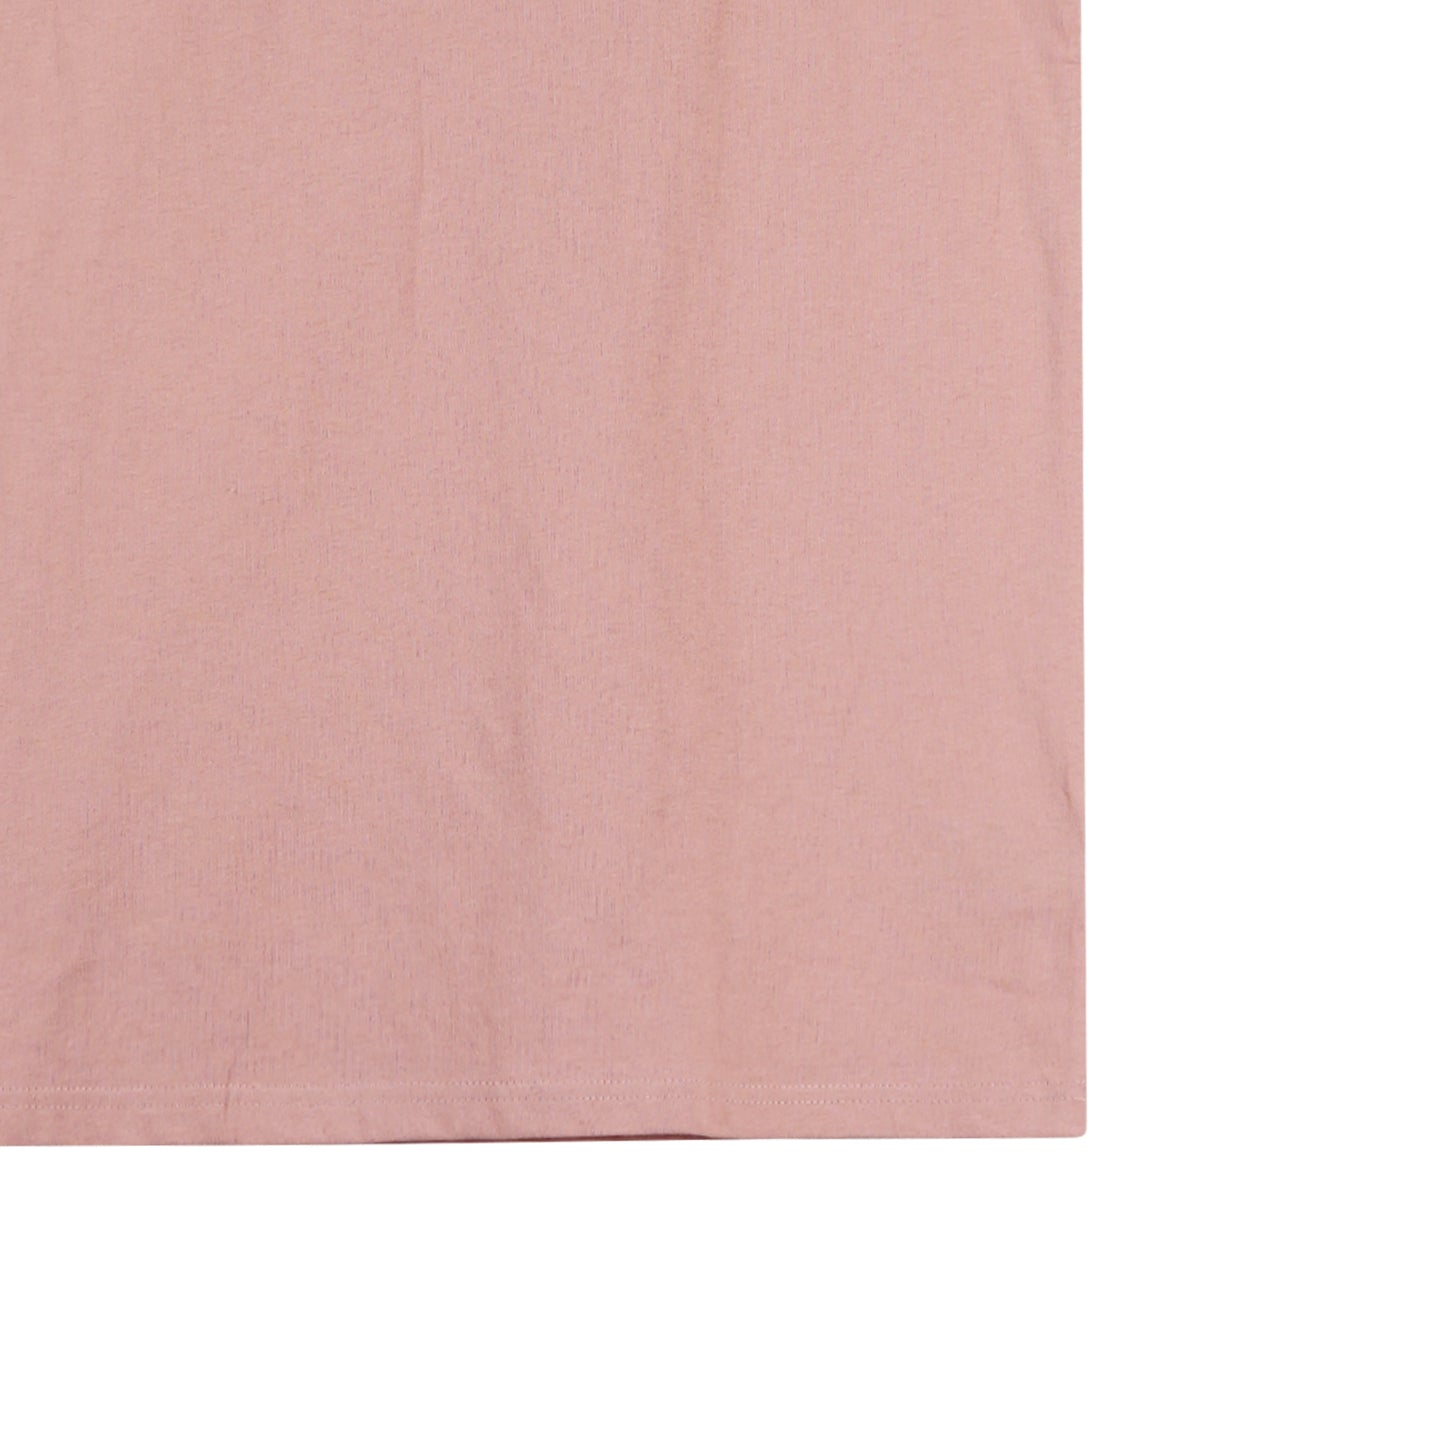 Petrol Men's Basic Tank Top Slim Fitting Tank Top Trendy fashion Casual Top Dusty Pink Sando for Men 119106 (Dusty Pink)